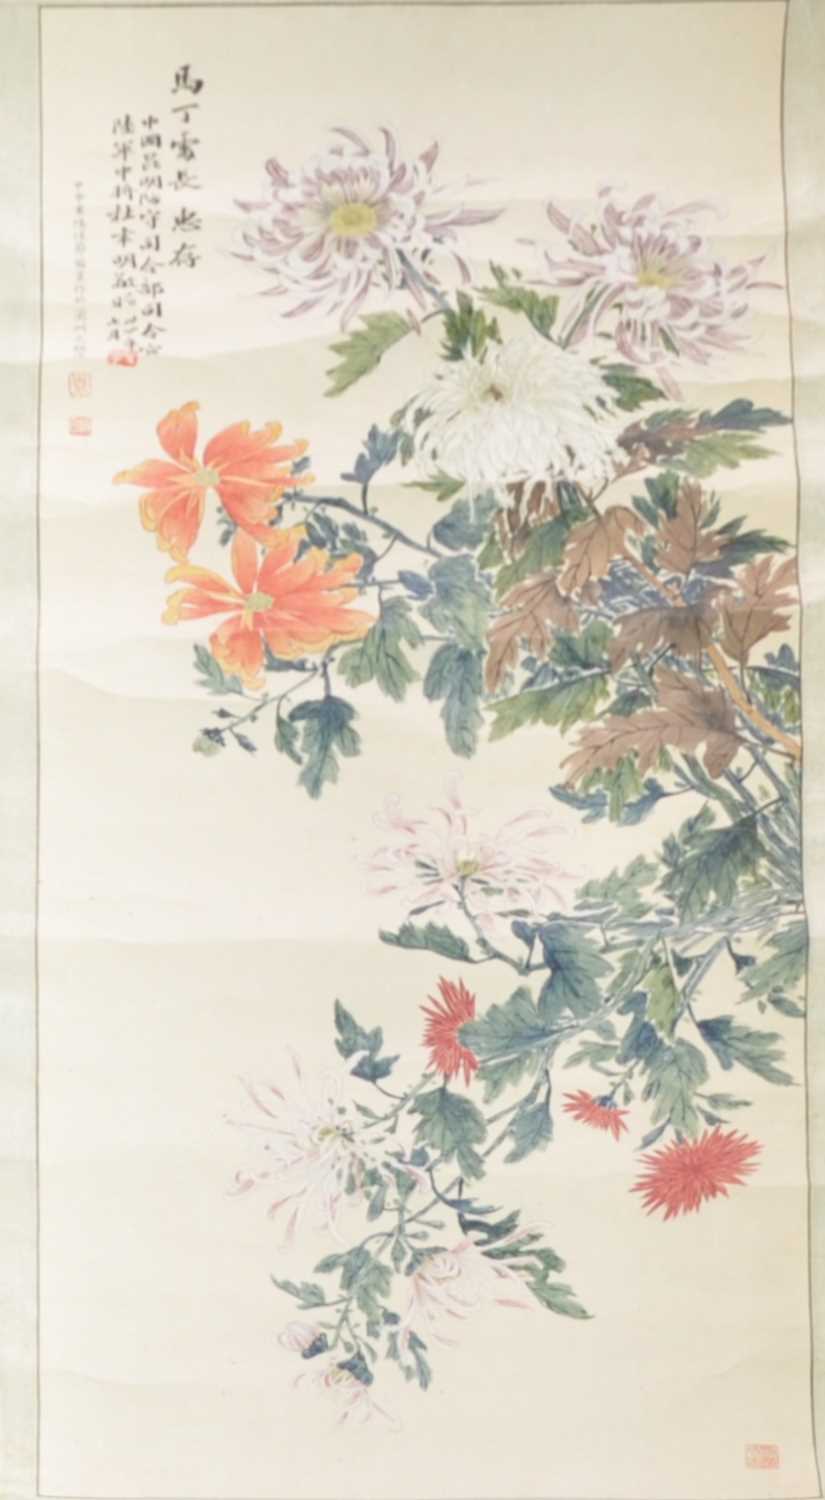 Yuan Yunyi (袁韻宜) (1920-2004) - Chrysanthemums, Republic of China scroll painting dated 1944, ink